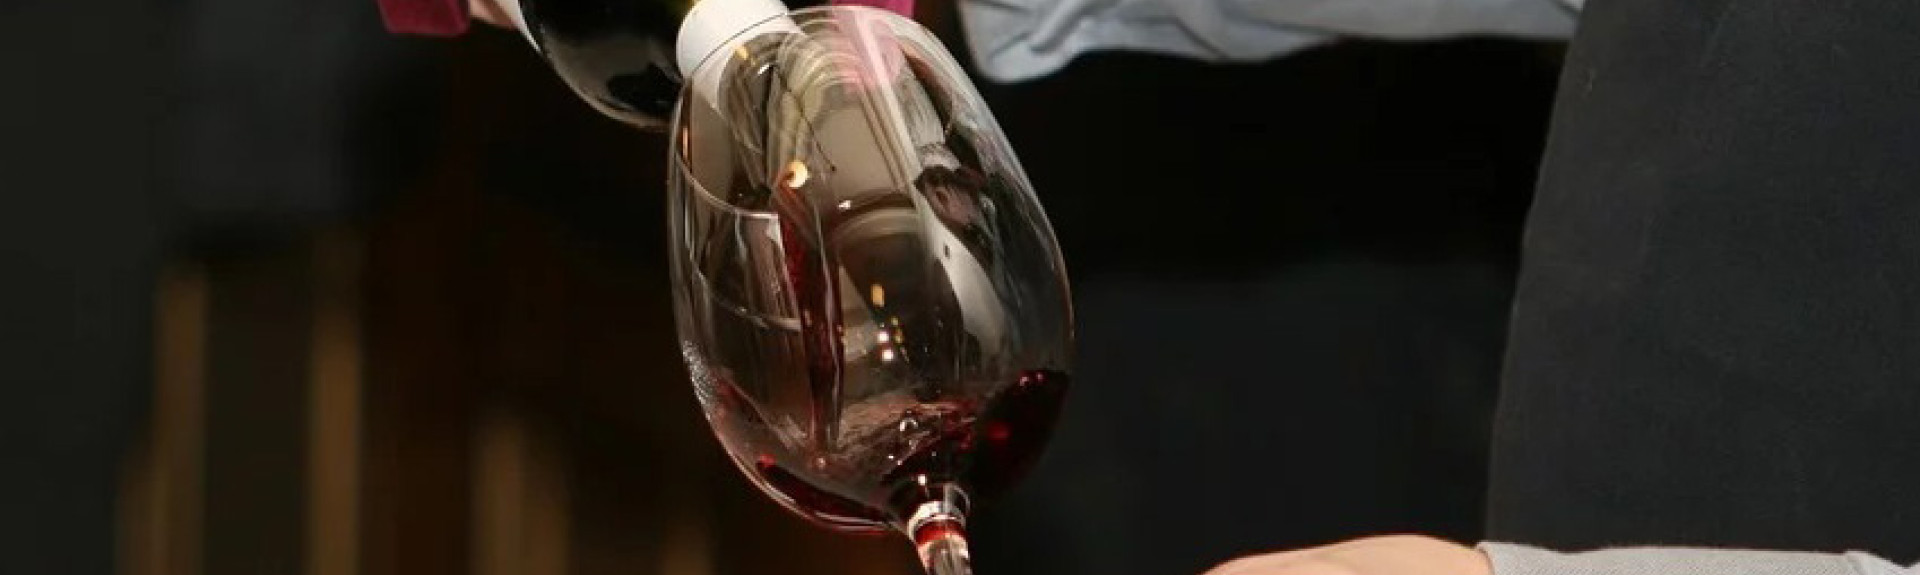 how-to-sound-like-a-wine-expert